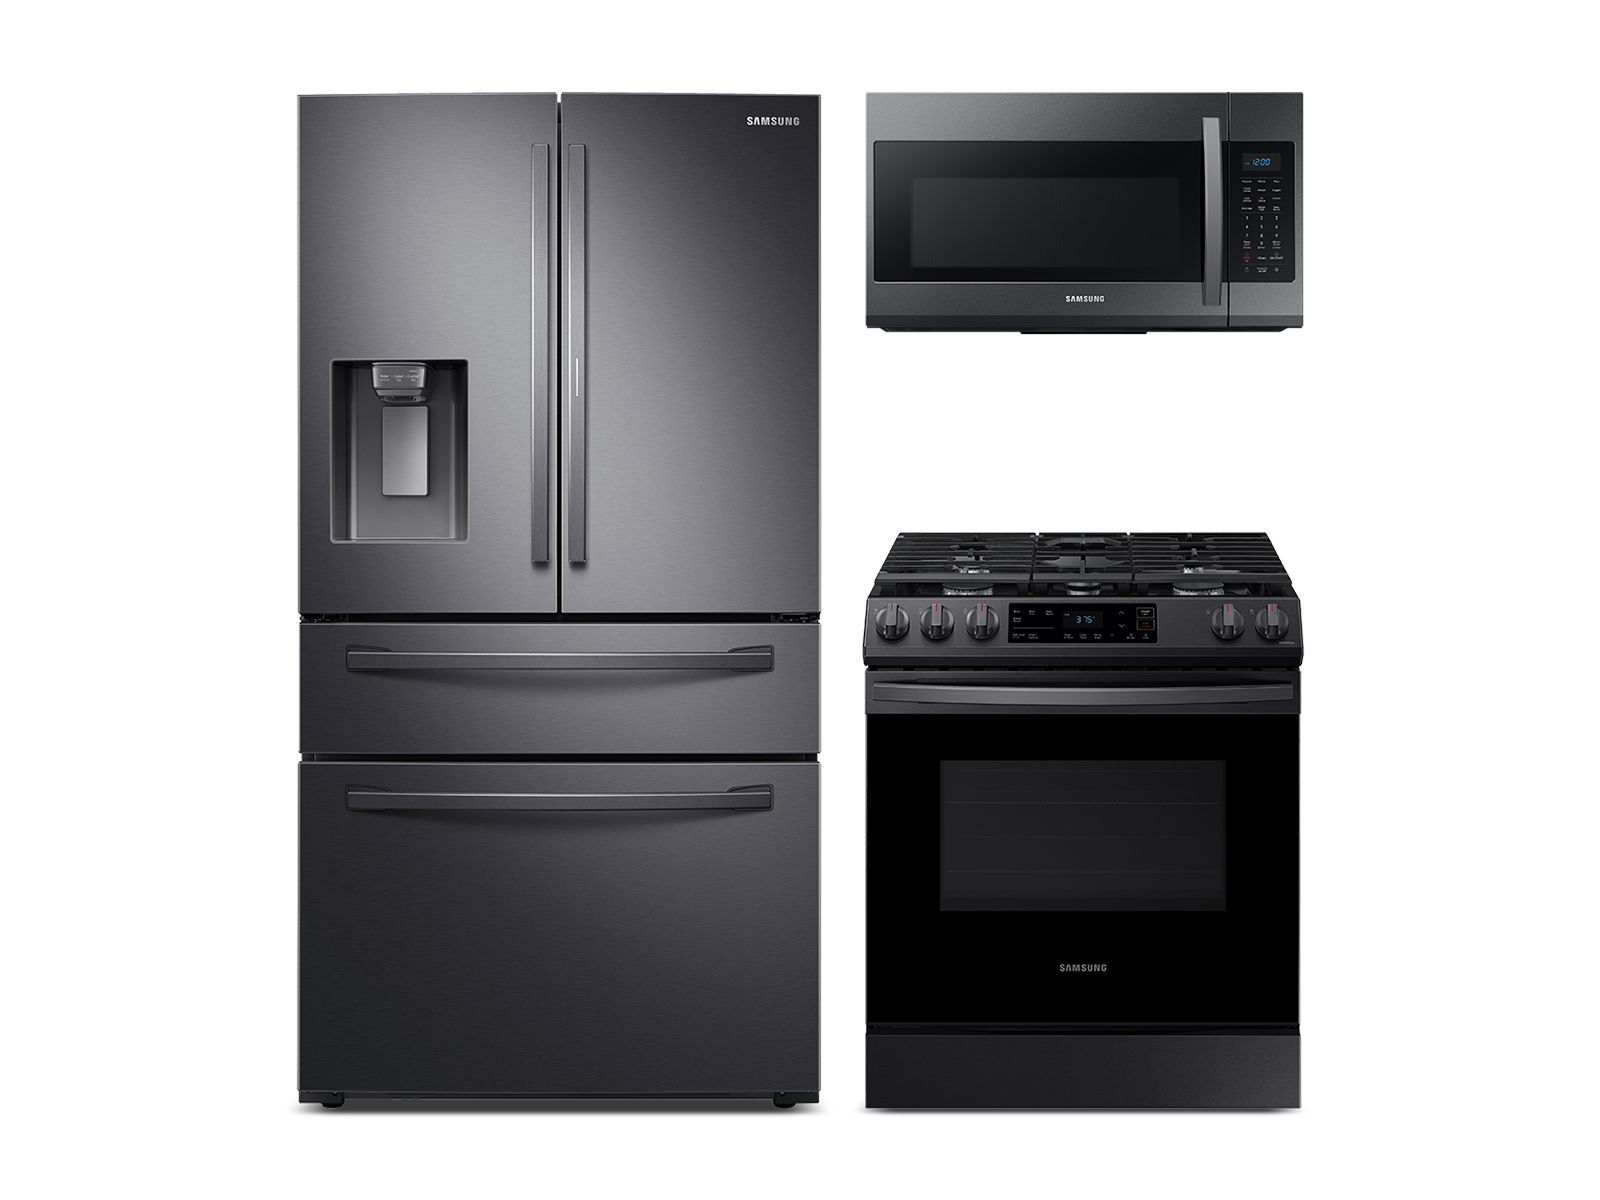 Food Showcase 4-Door French Door Refrigerator, Smart Slide-in Gas Range and Sensor Cooking Microwave all in Black Stainless Steel package